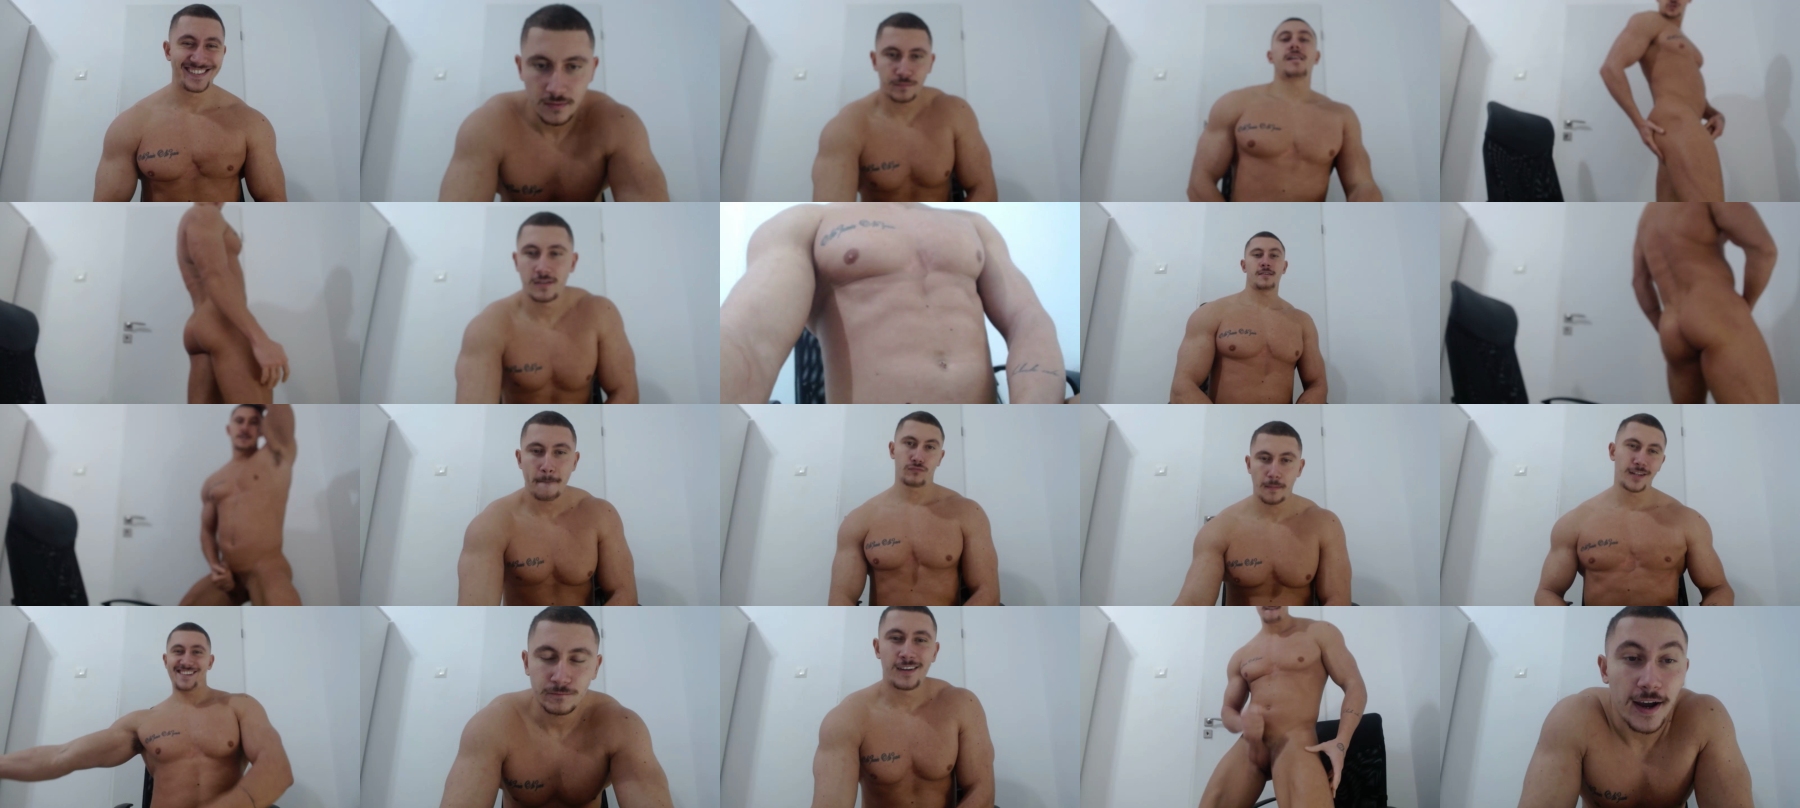 Angelofit  18-12-2021 Male Topless